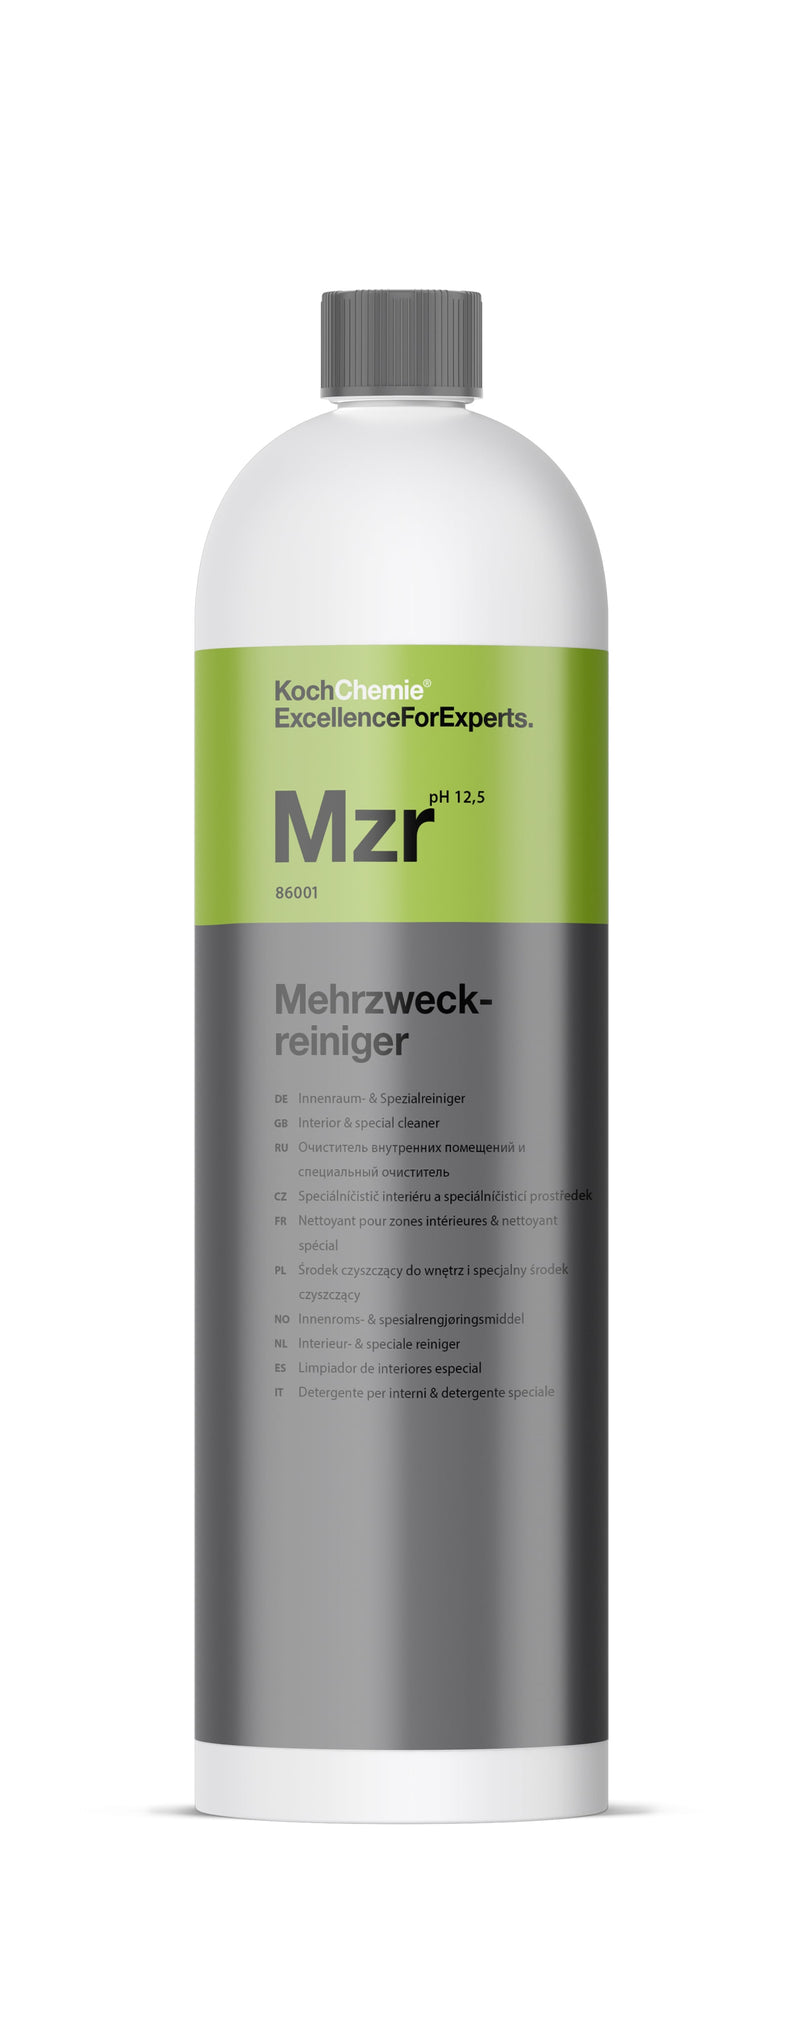 Koch Chemie Mzr Interior Cleaner Daimler Specialcleaner Ph12,5